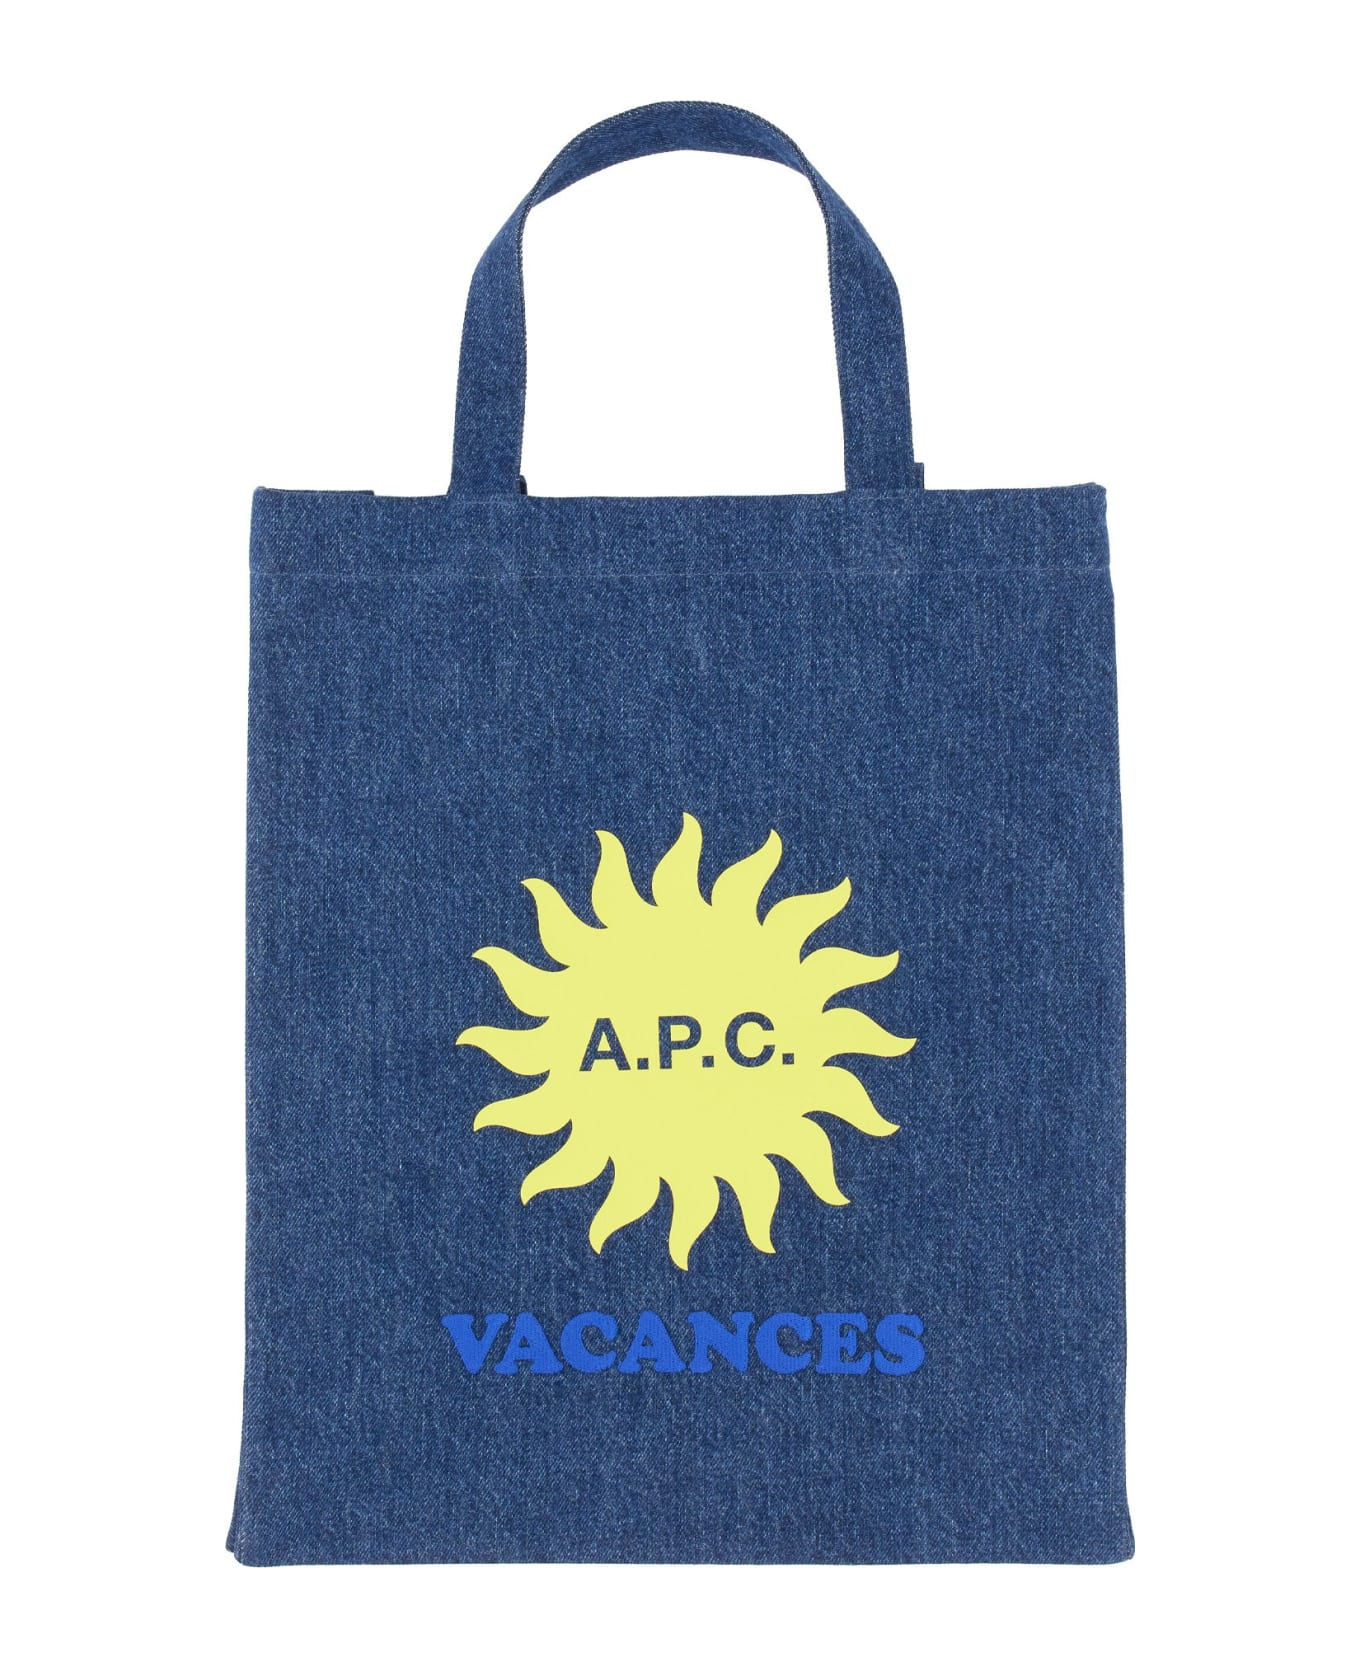 A.P.C. Denim Tote Bag With Print - BLU